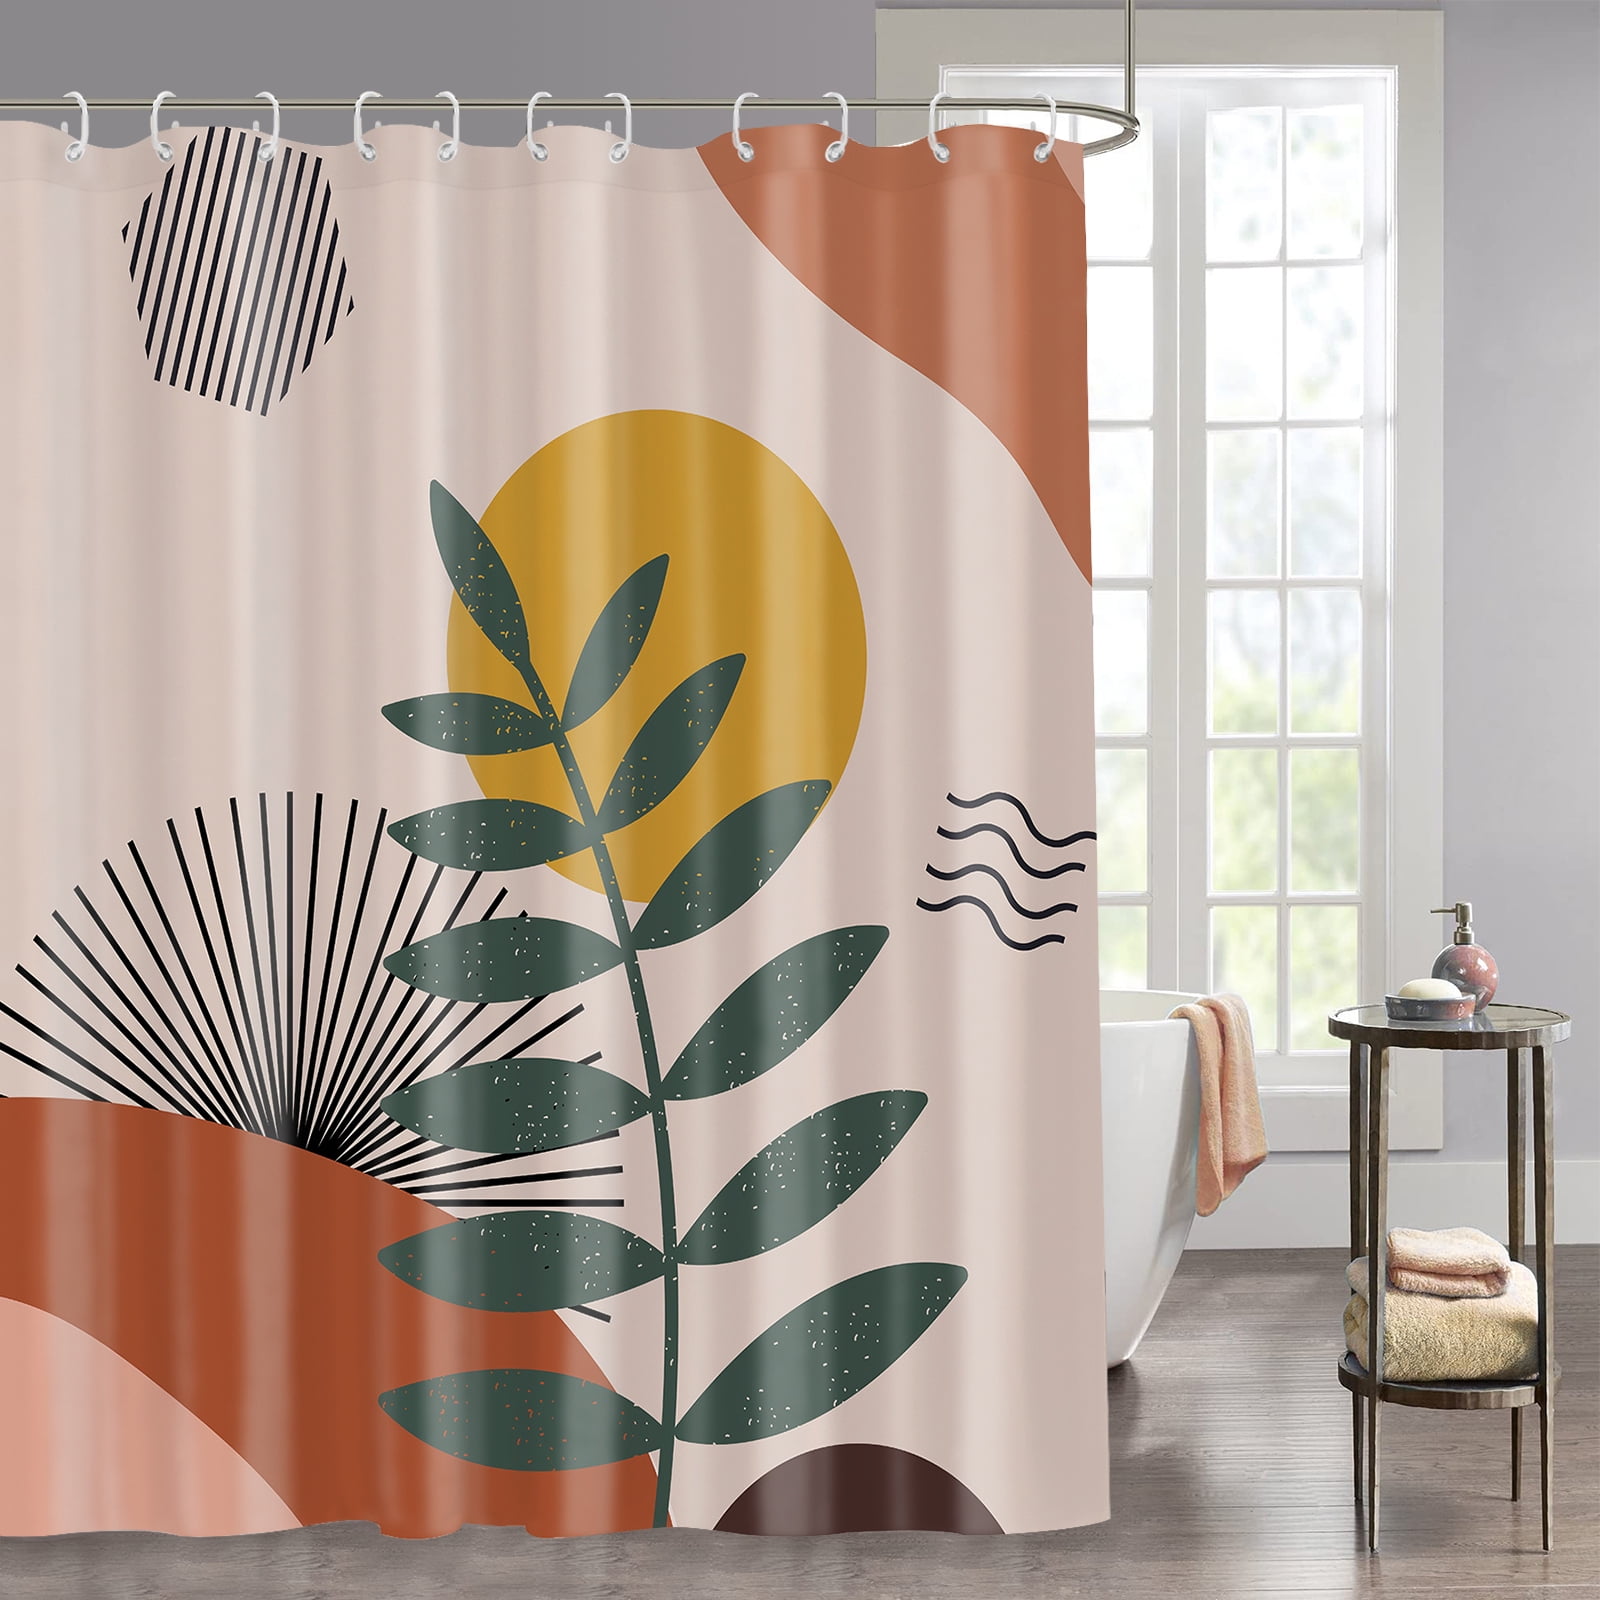 Bathroom Child Shower Curtain Waterproof Cartoon Pig Fabric with 12Hooks 71inch 